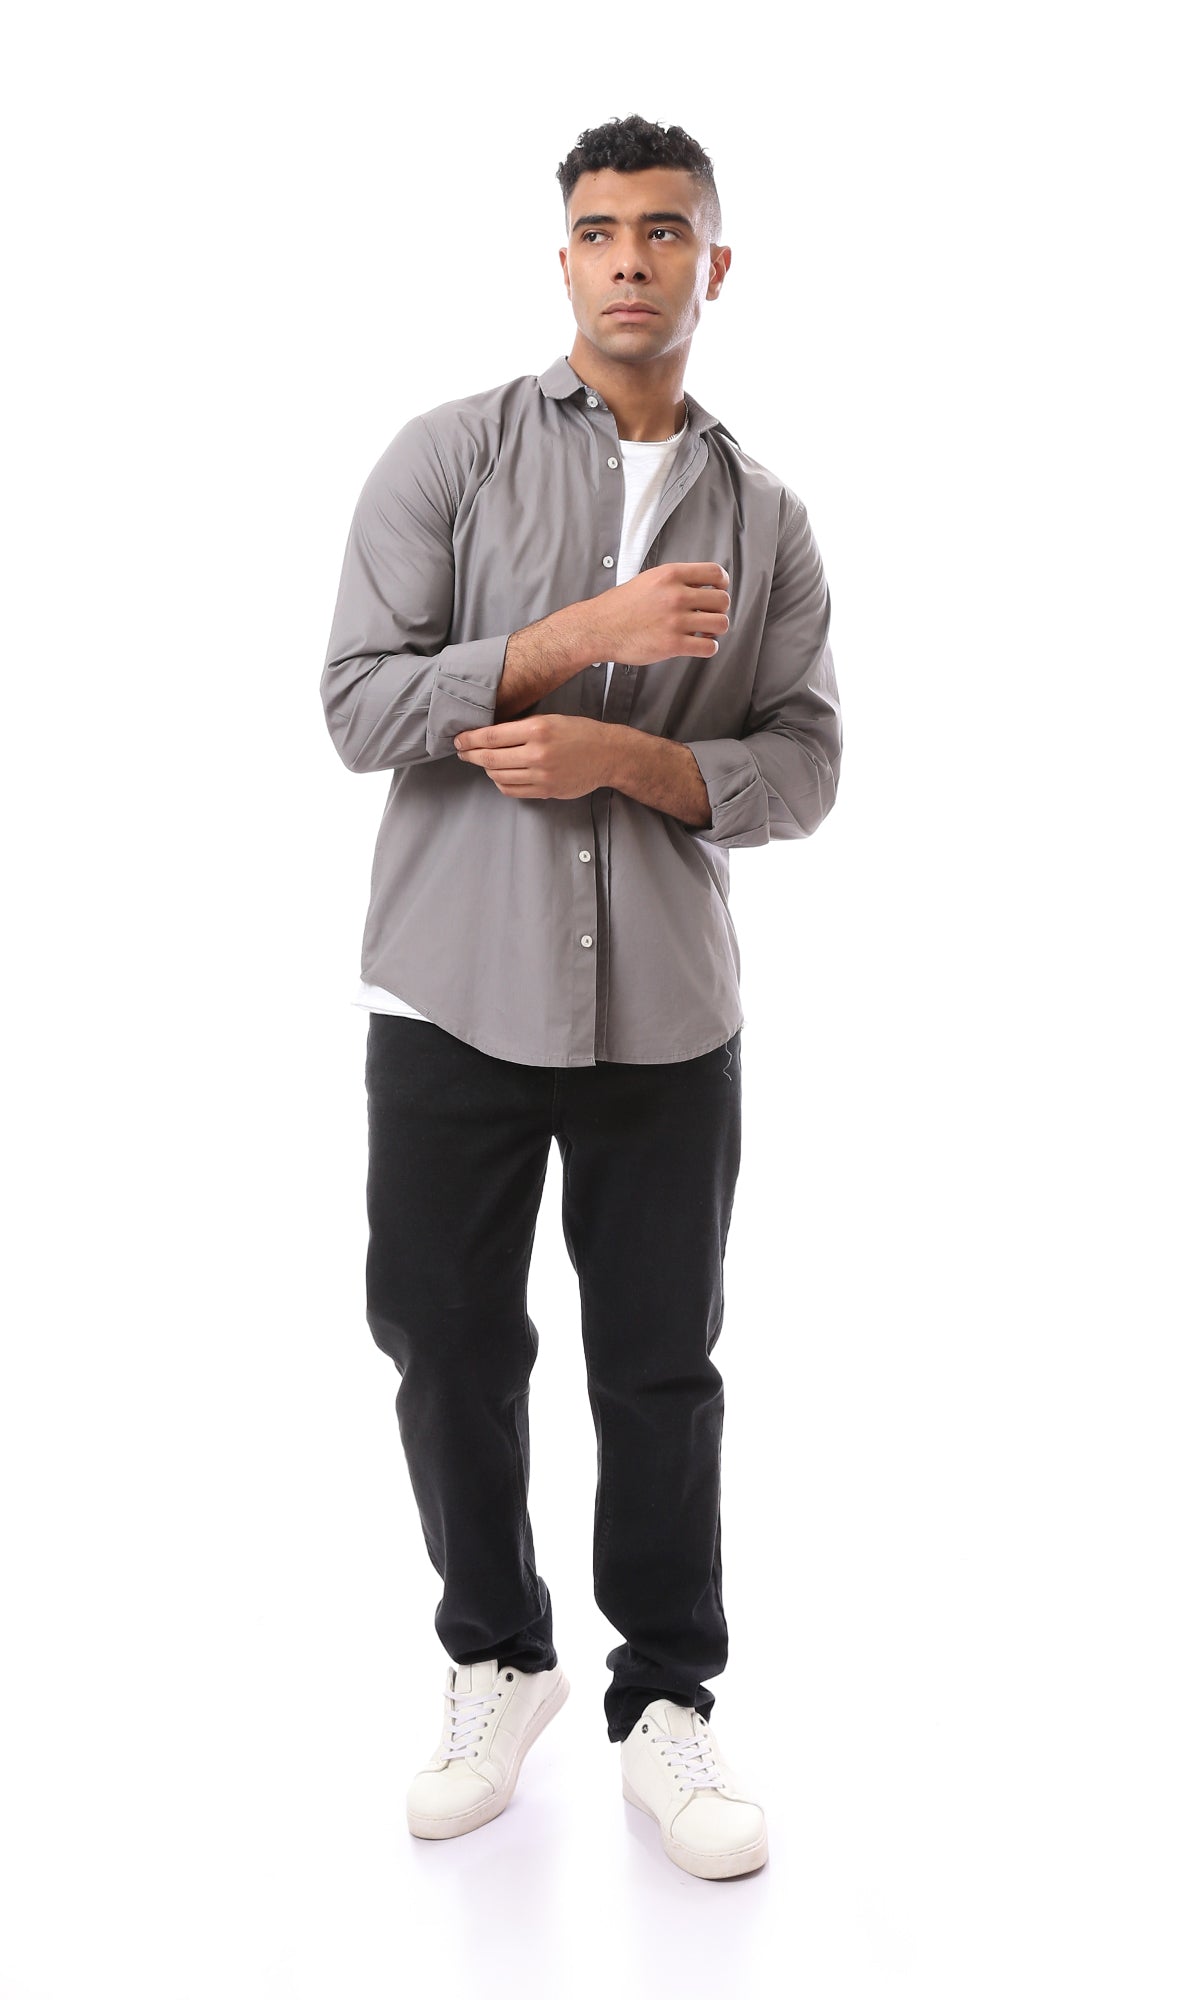 O163549 Buttoned Long Sleeves Fashioned Medium Grey Shirt